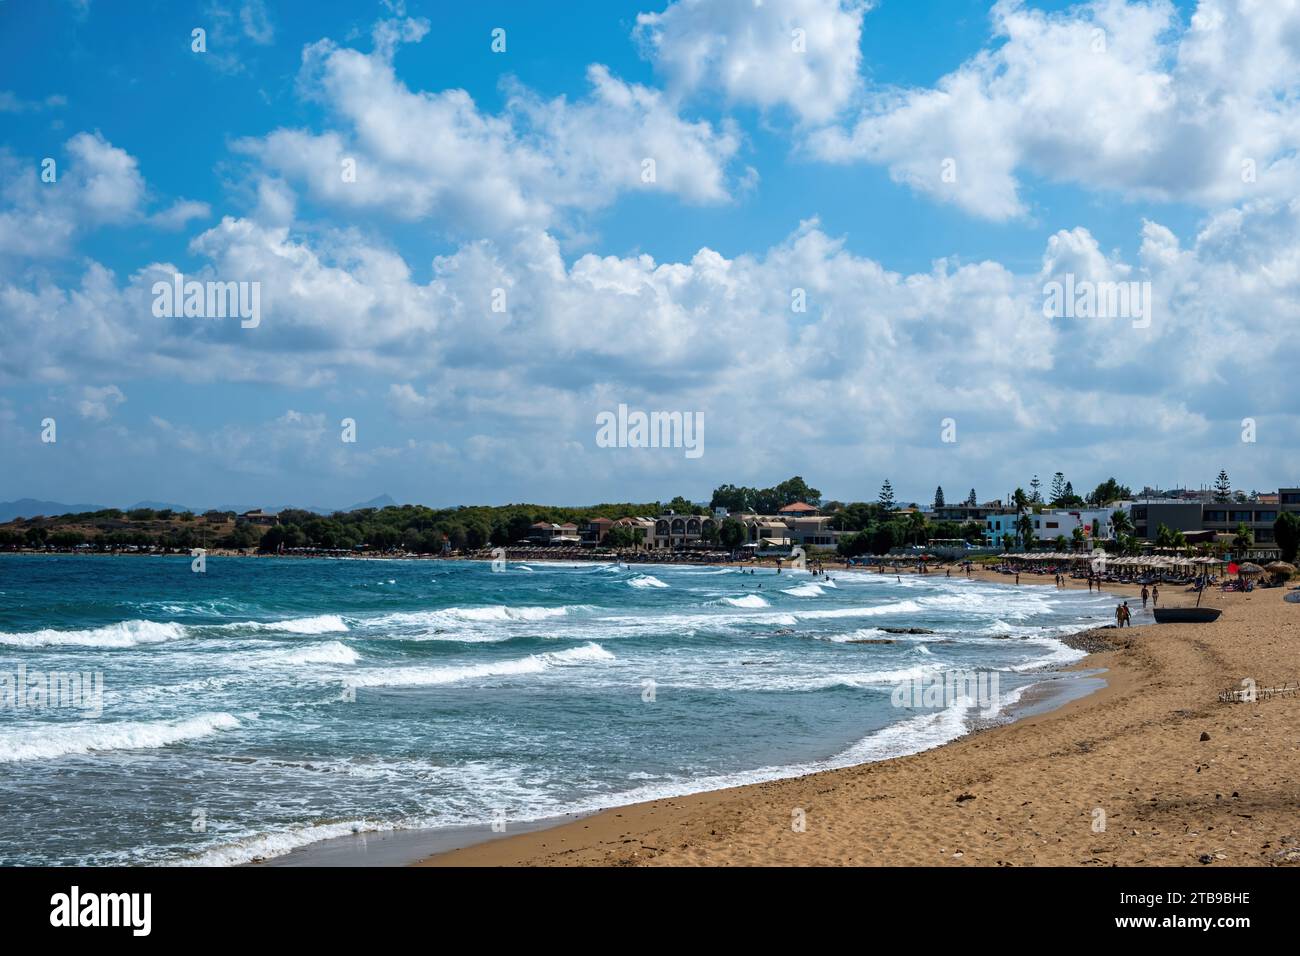 Summer holiday at seaside. Umbrella, lounger, sandy beach sunny day. Ripple sea water, nature, people, swim, leisure, relaxation, sunbathe in Greece. Stock Photo